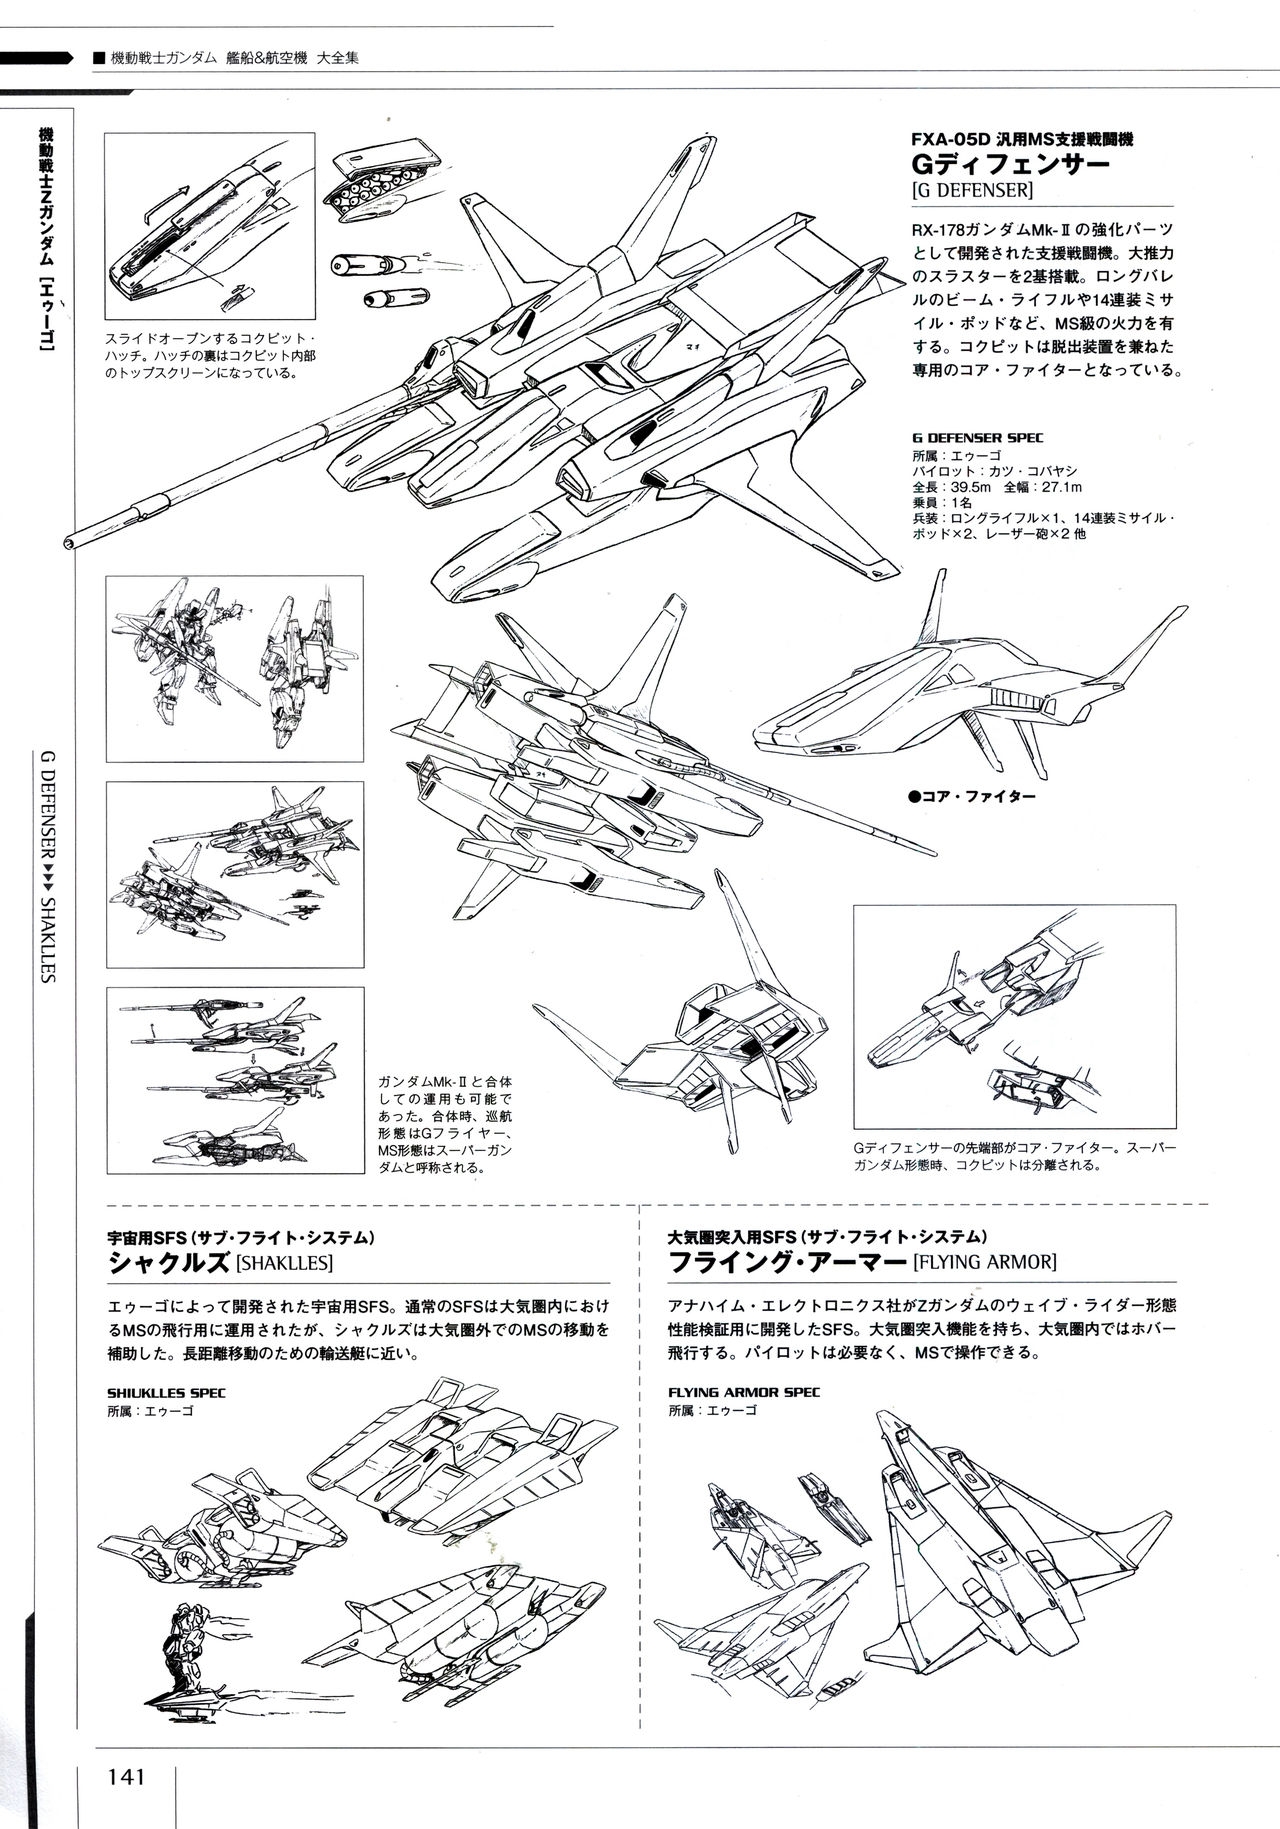 Mobile Suit Gundam - Ship & Aerospace Plane Encyclopedia - Revised Edition 146